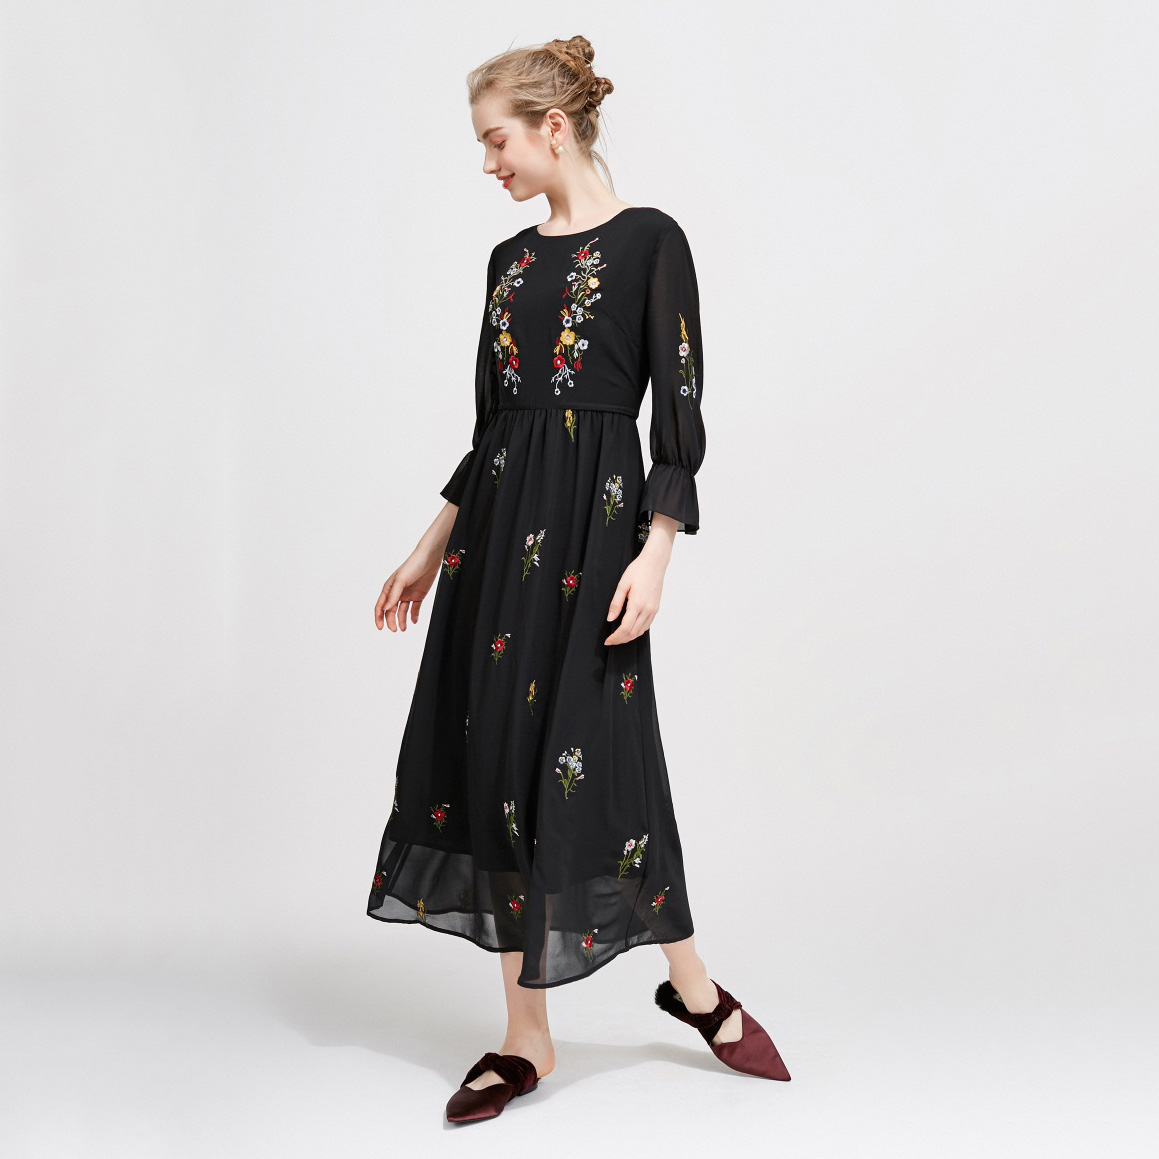 Dongfan-Printing Woman Dress Summer 2018 Beautiful Summer Dresses